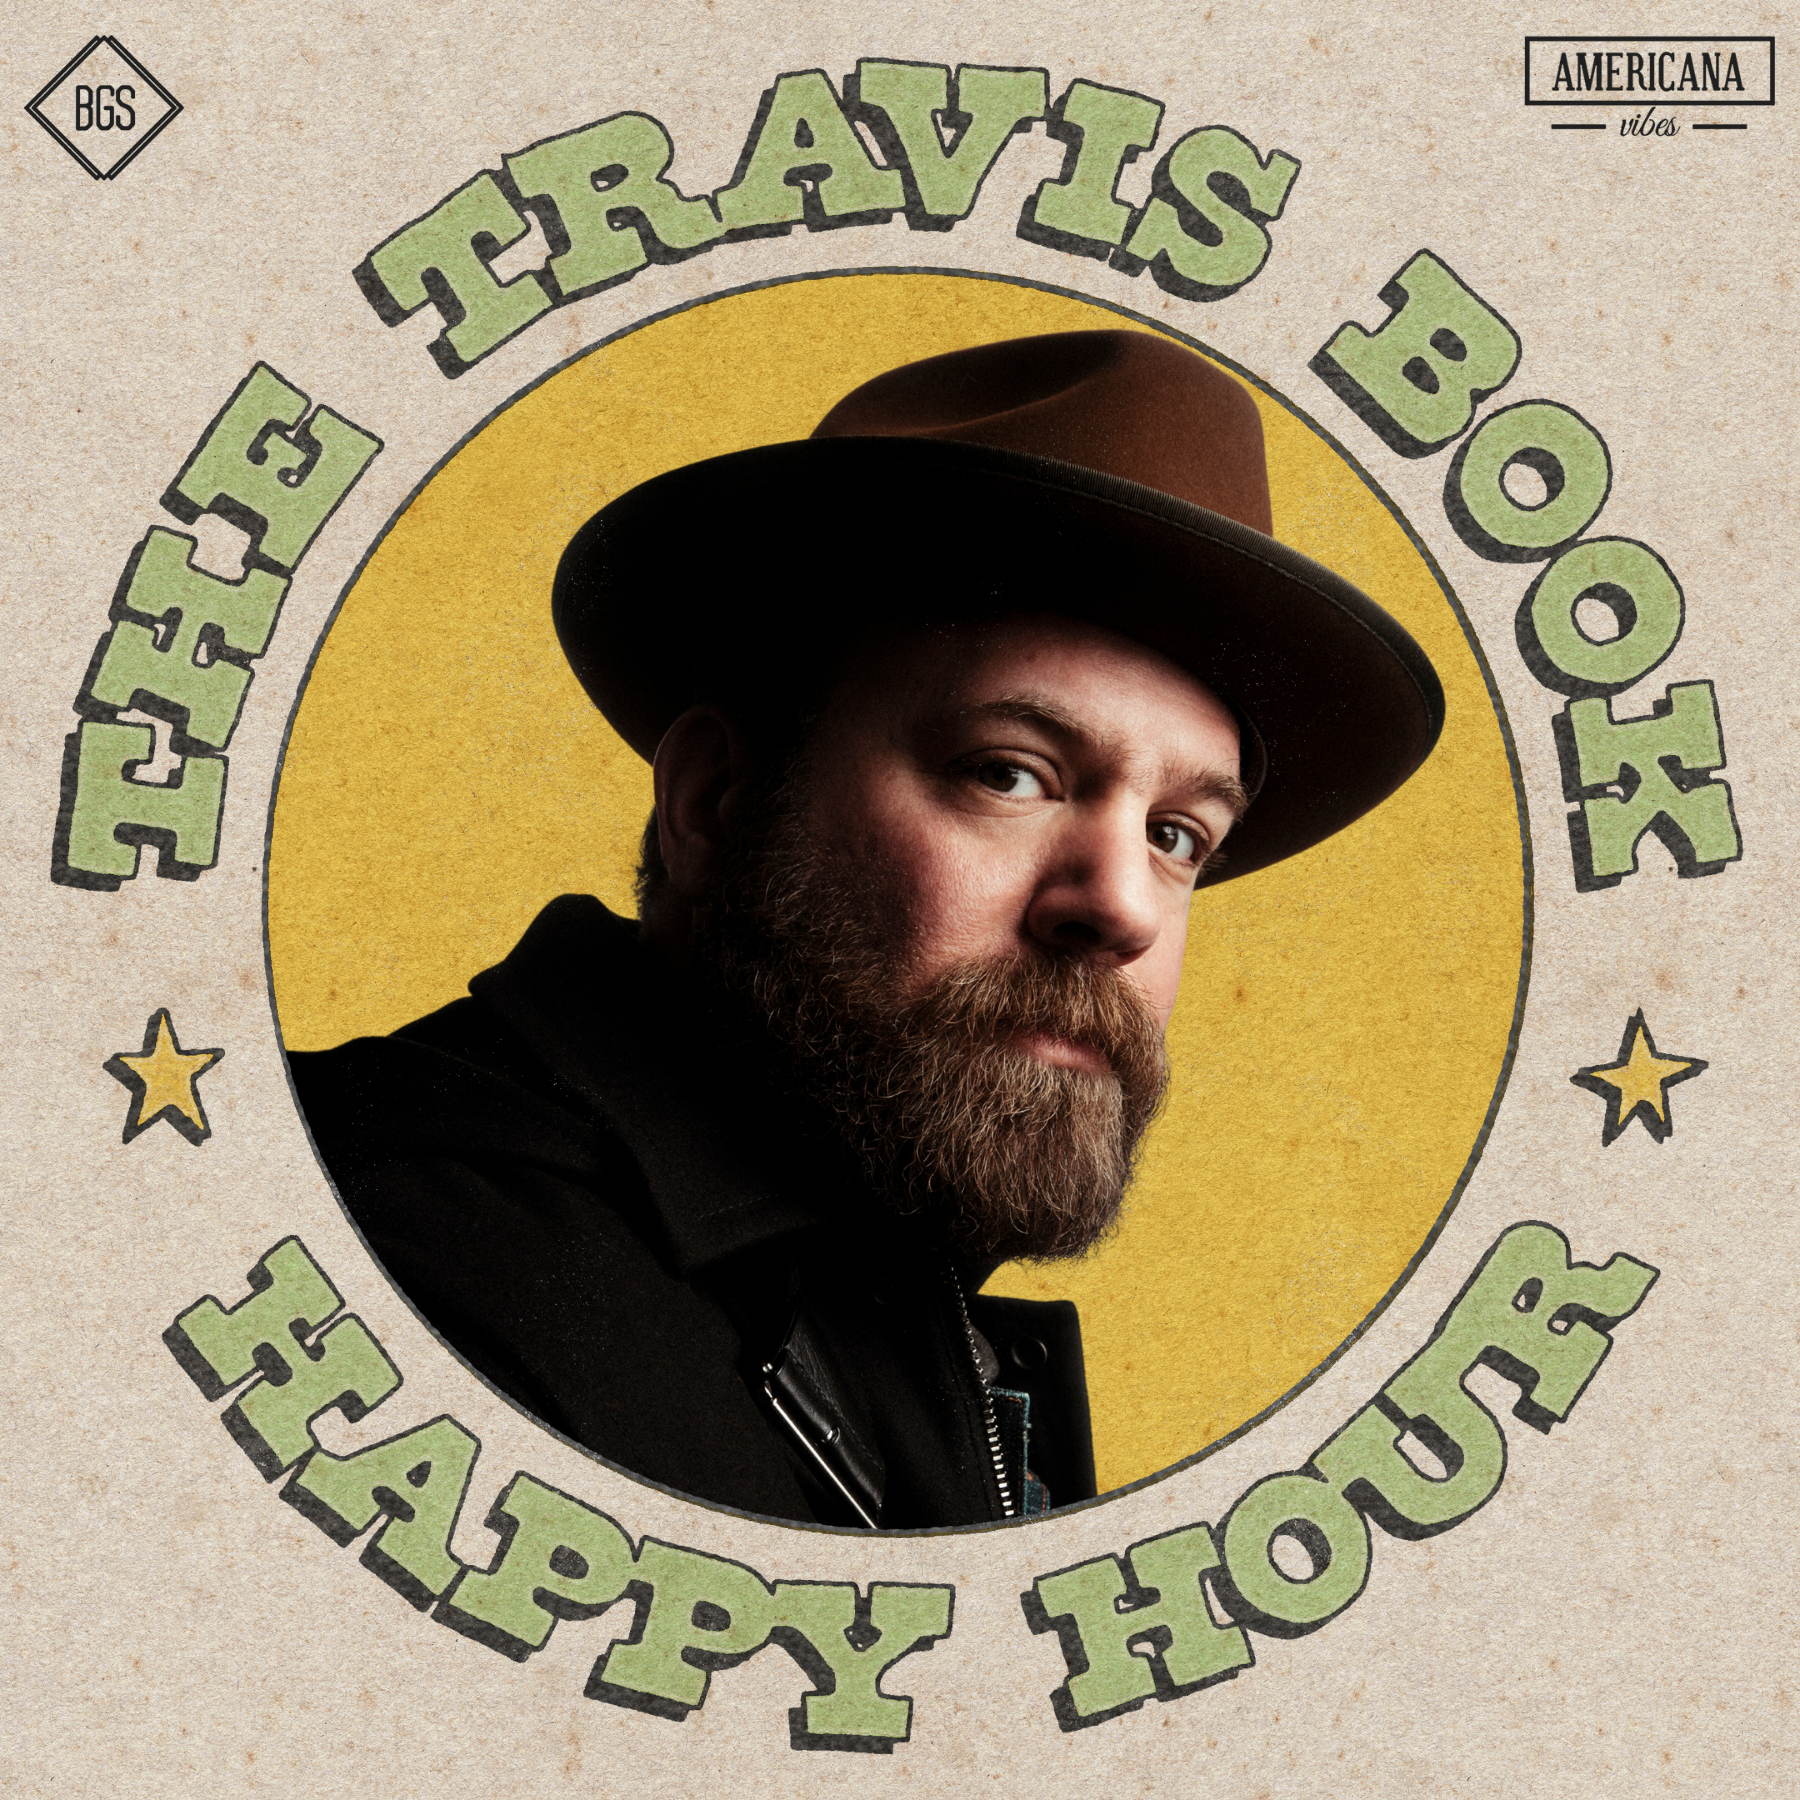 The Travis Book Happy Hour: Cris Jacobs